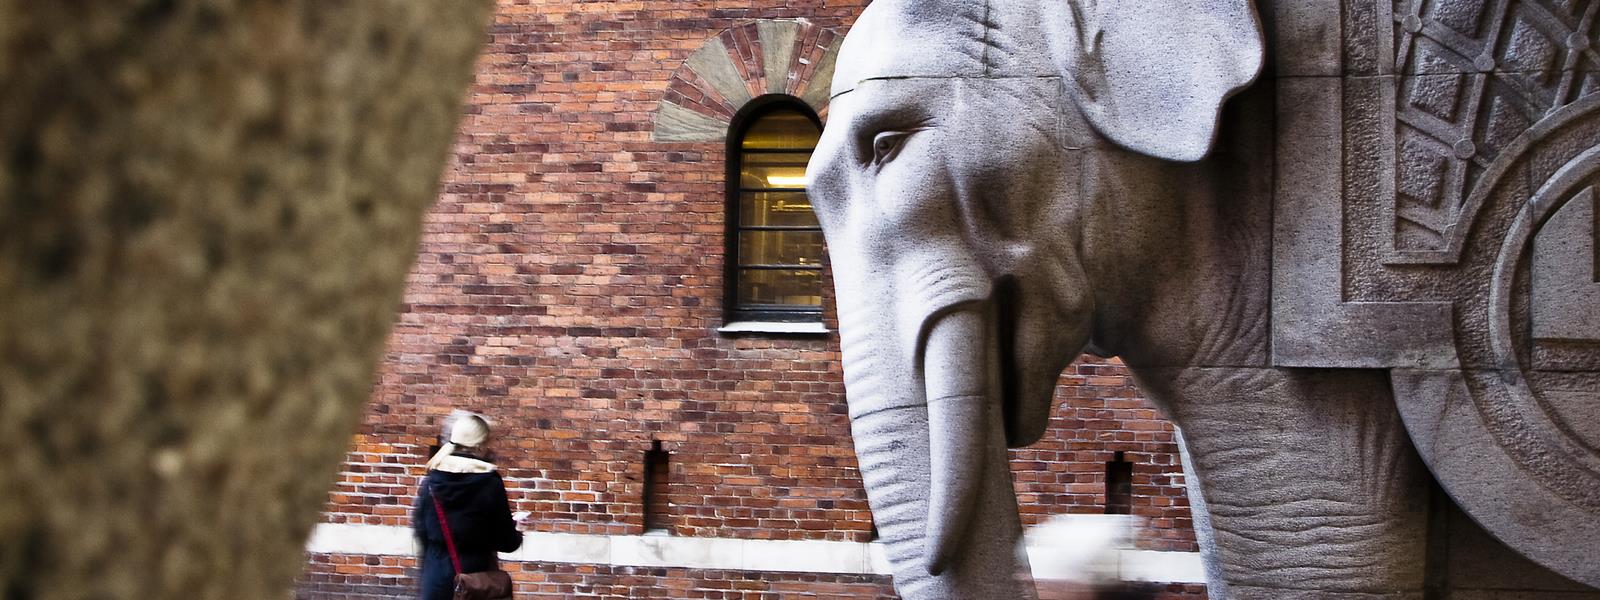 Elefantporten i Carlsberg Byen